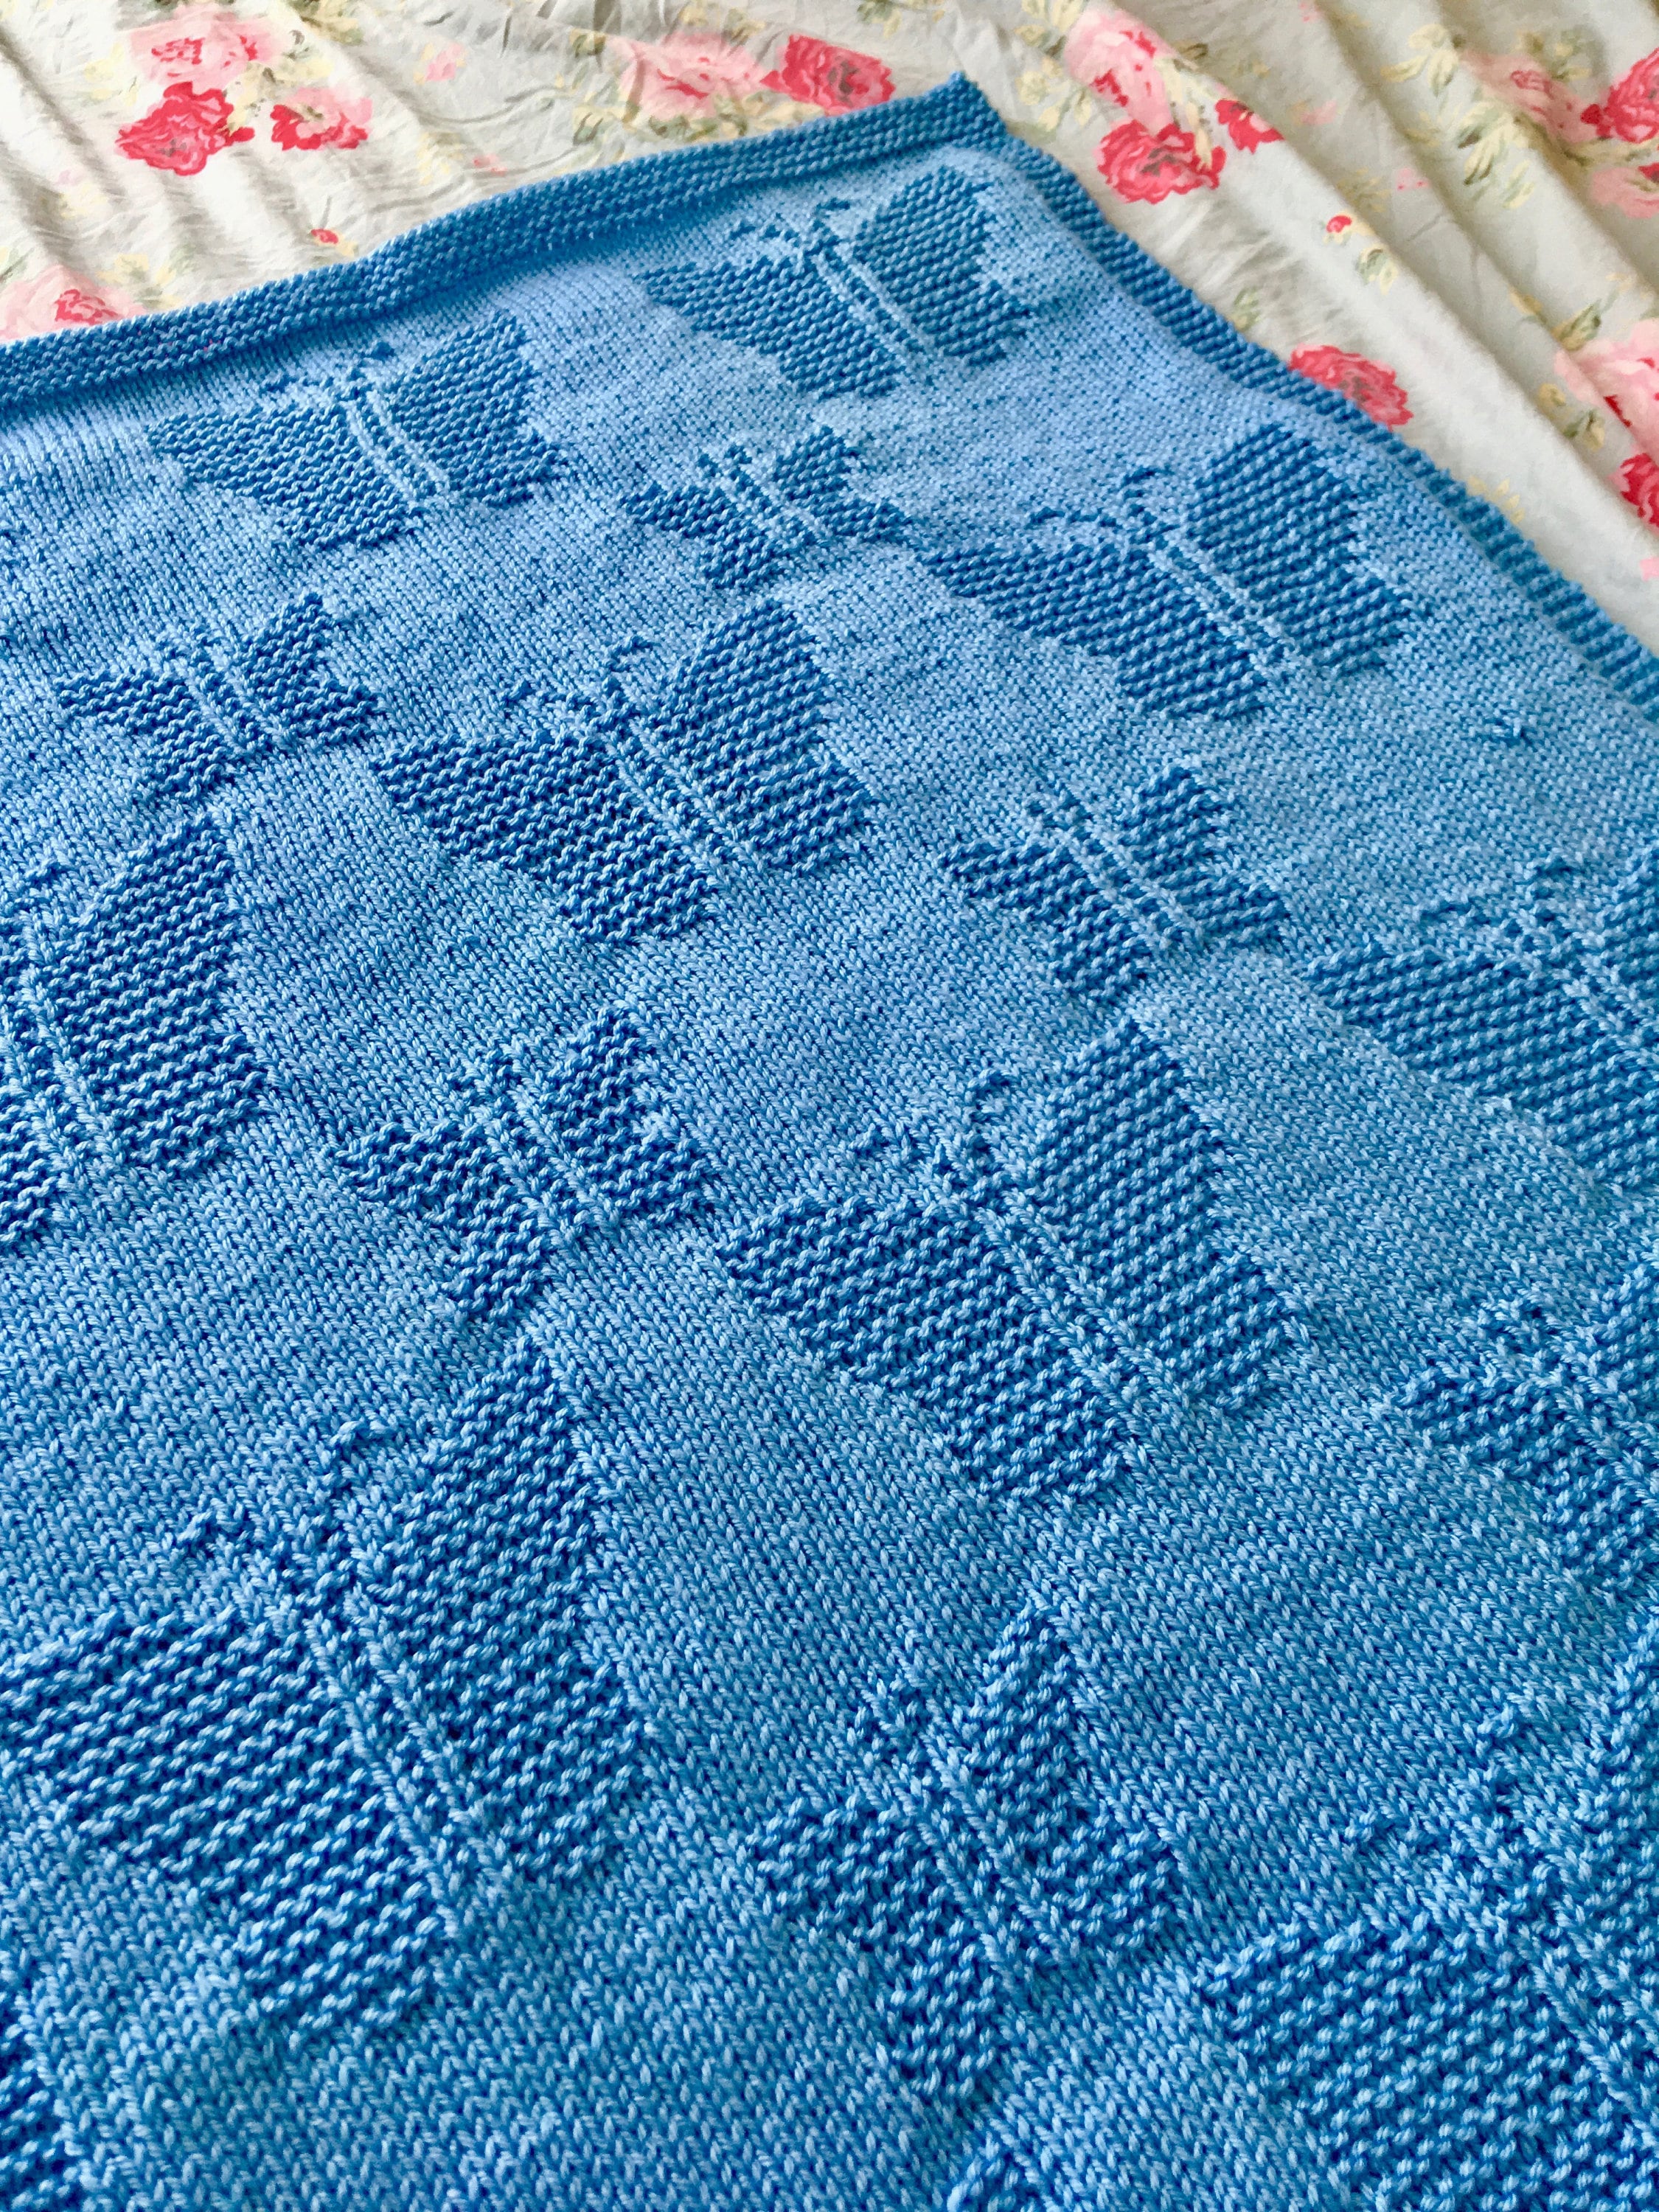 Loom Knitting Baby Blanket Patterns